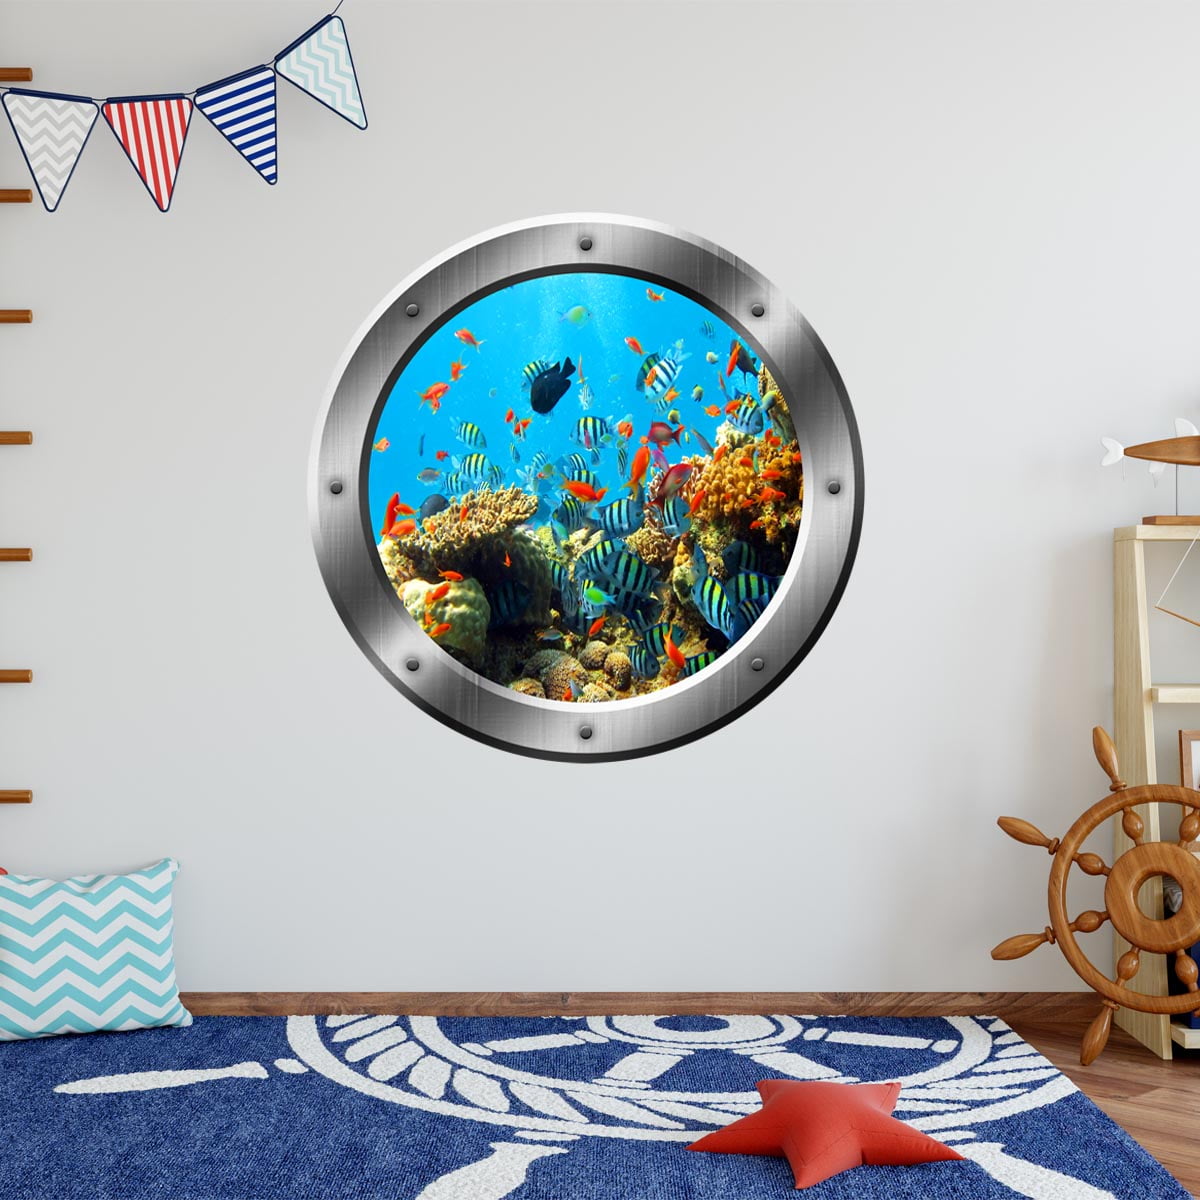 Set 3D Acrylic Mirror Sea Fish Bubble Wall Sticker Home Decal Kids Room RF 